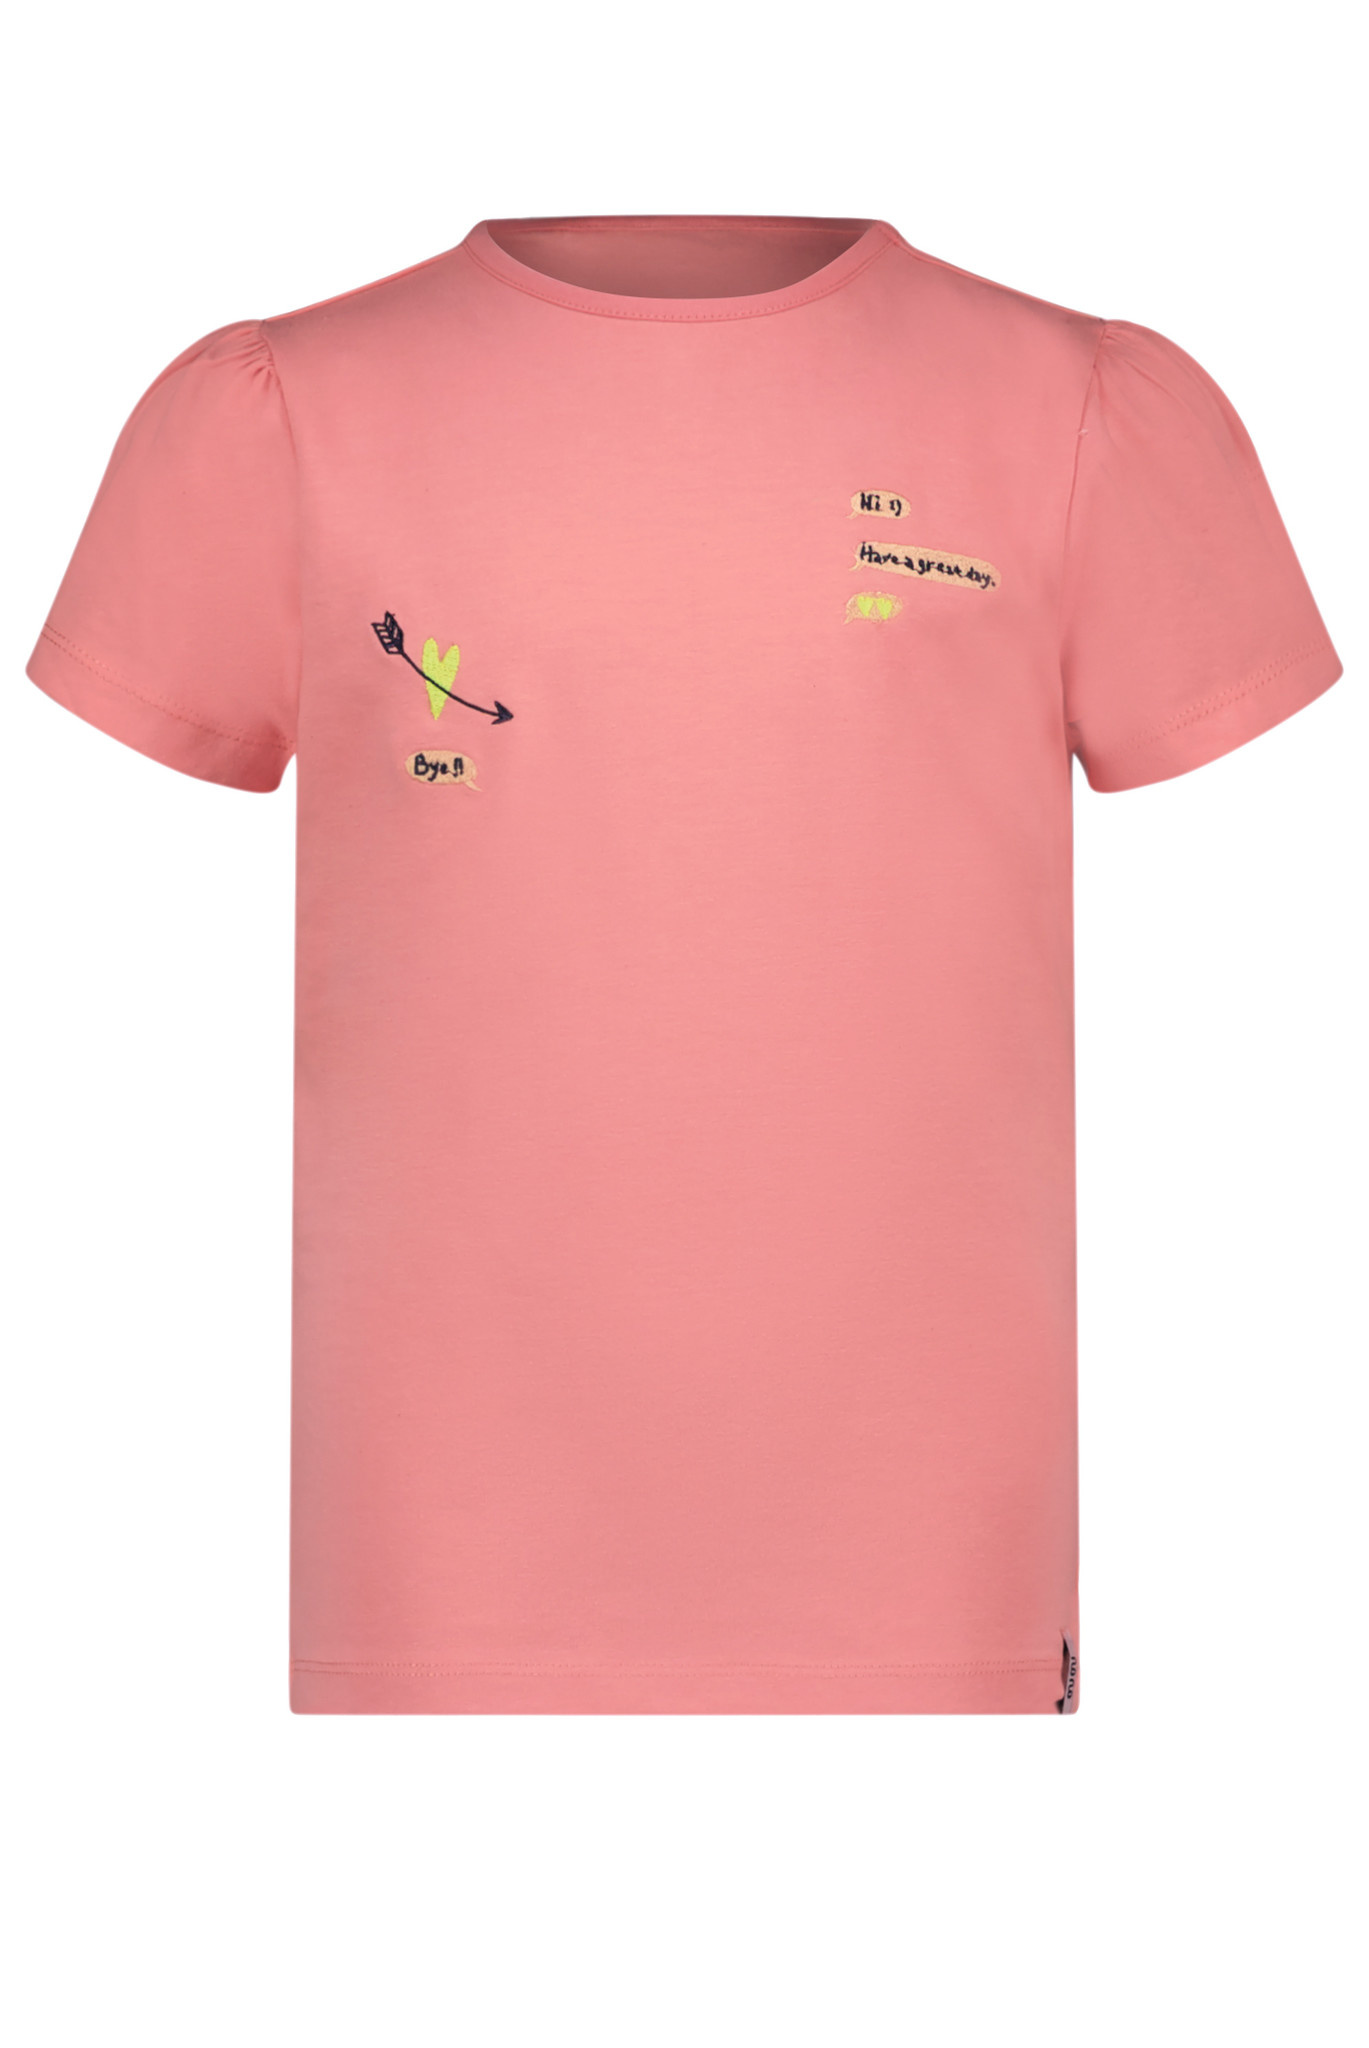 NONO N302-5403 Meisjes T-shirt - Maat 116